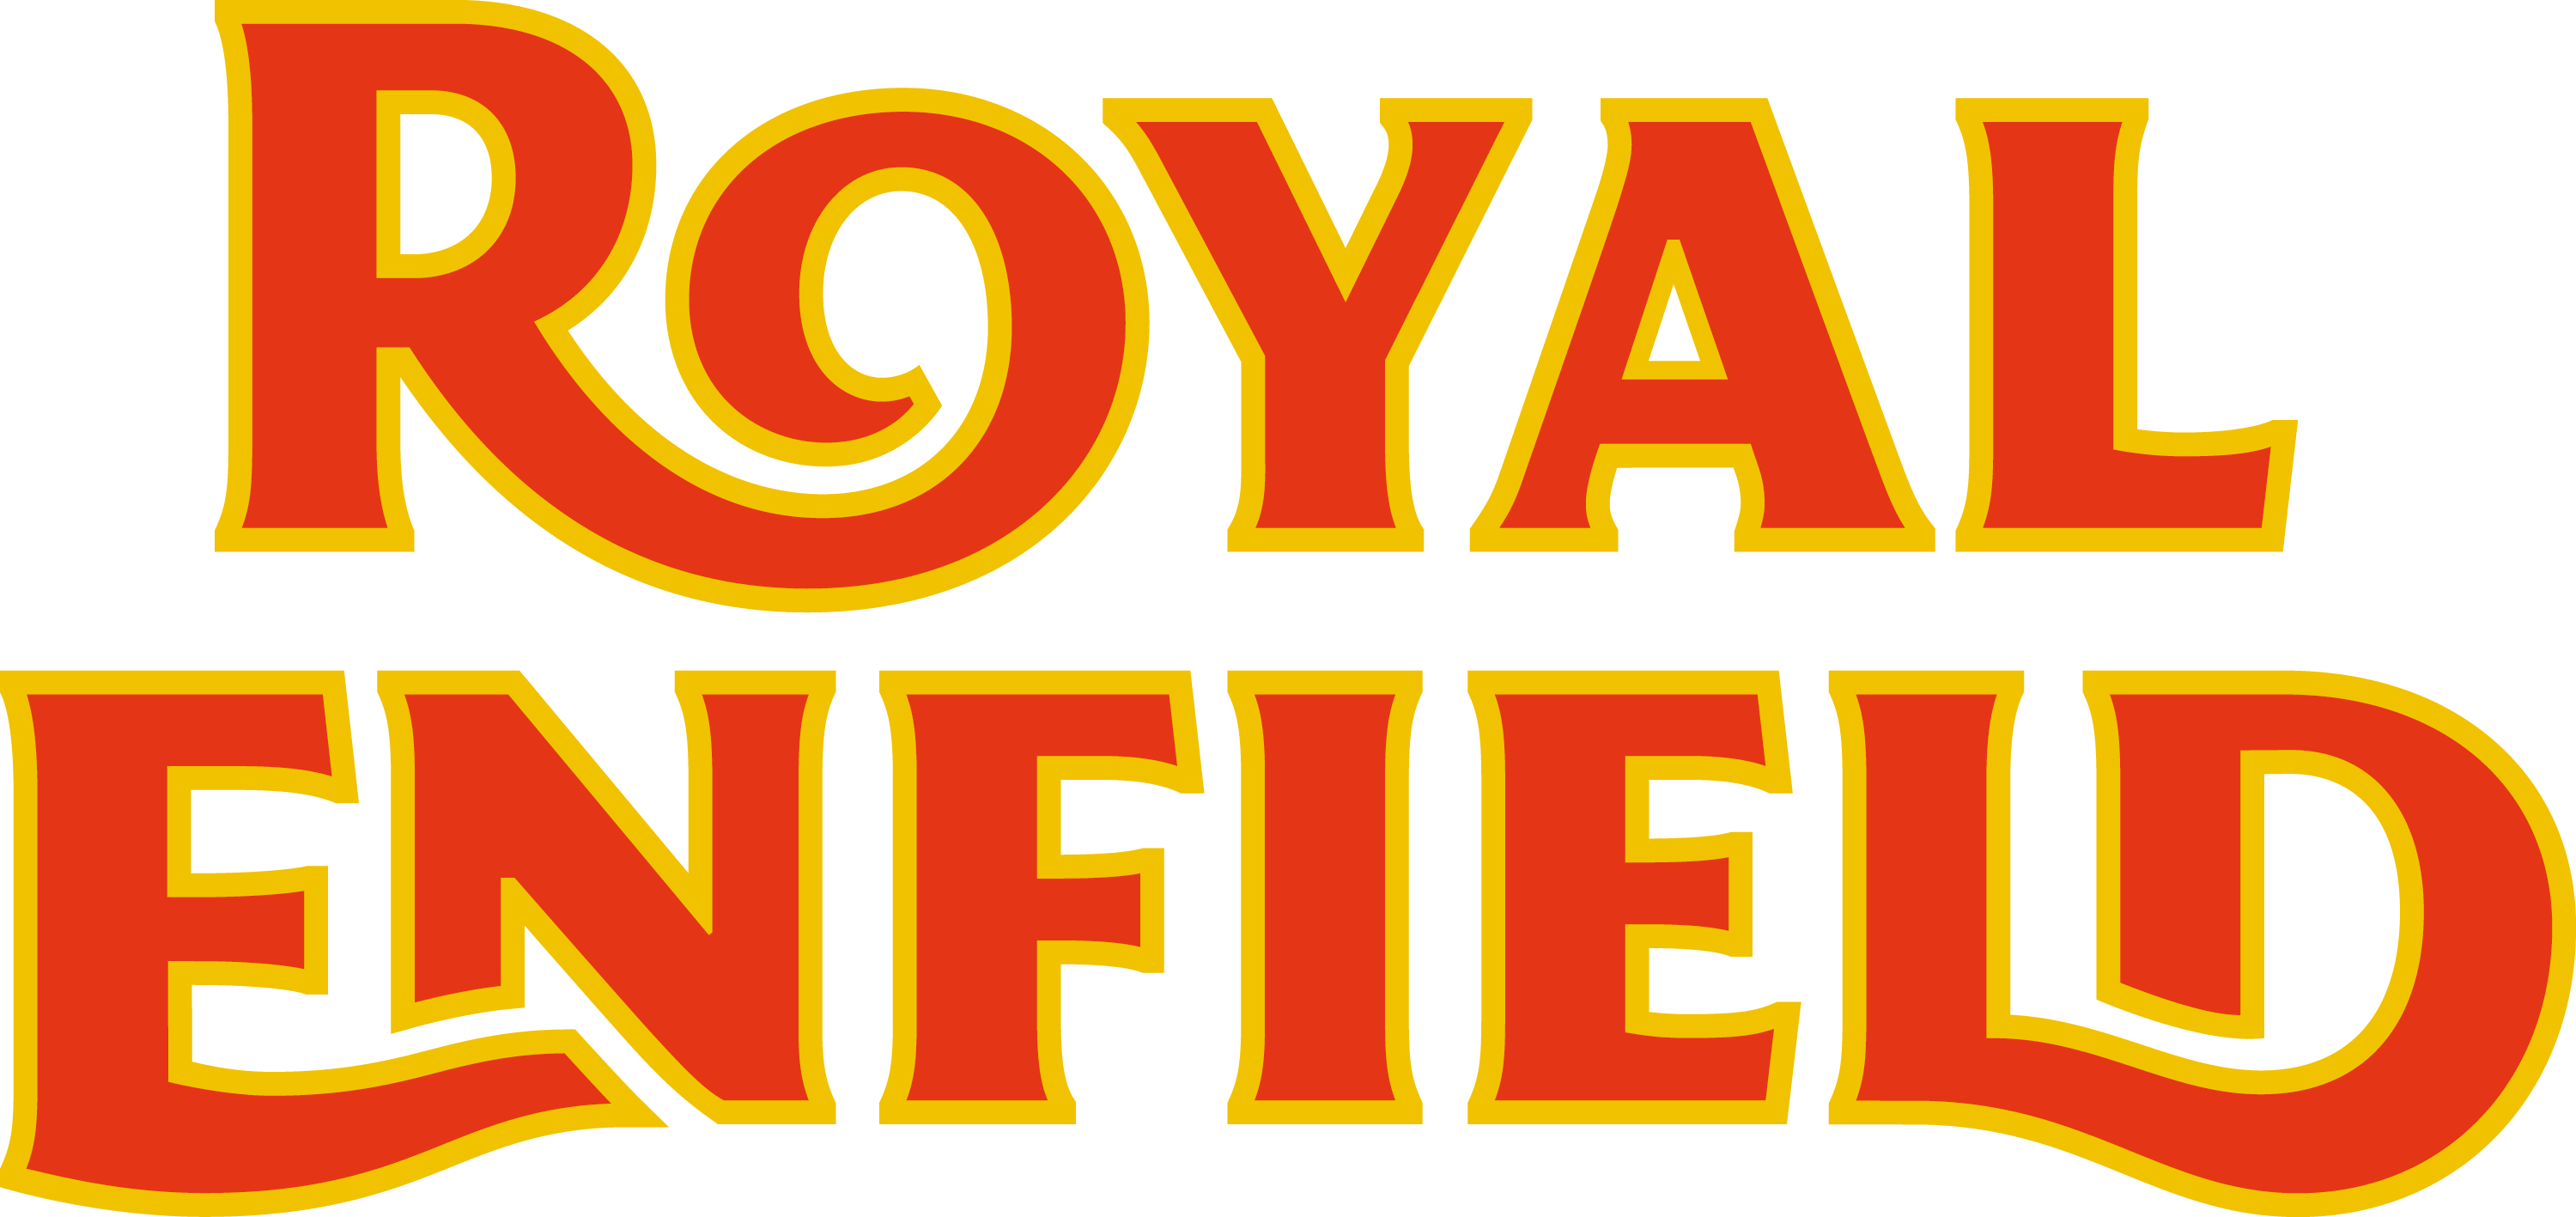 Royal Enfield sichert sich den Markennamen “Guerrilla 450” – Was steckt dahinter?